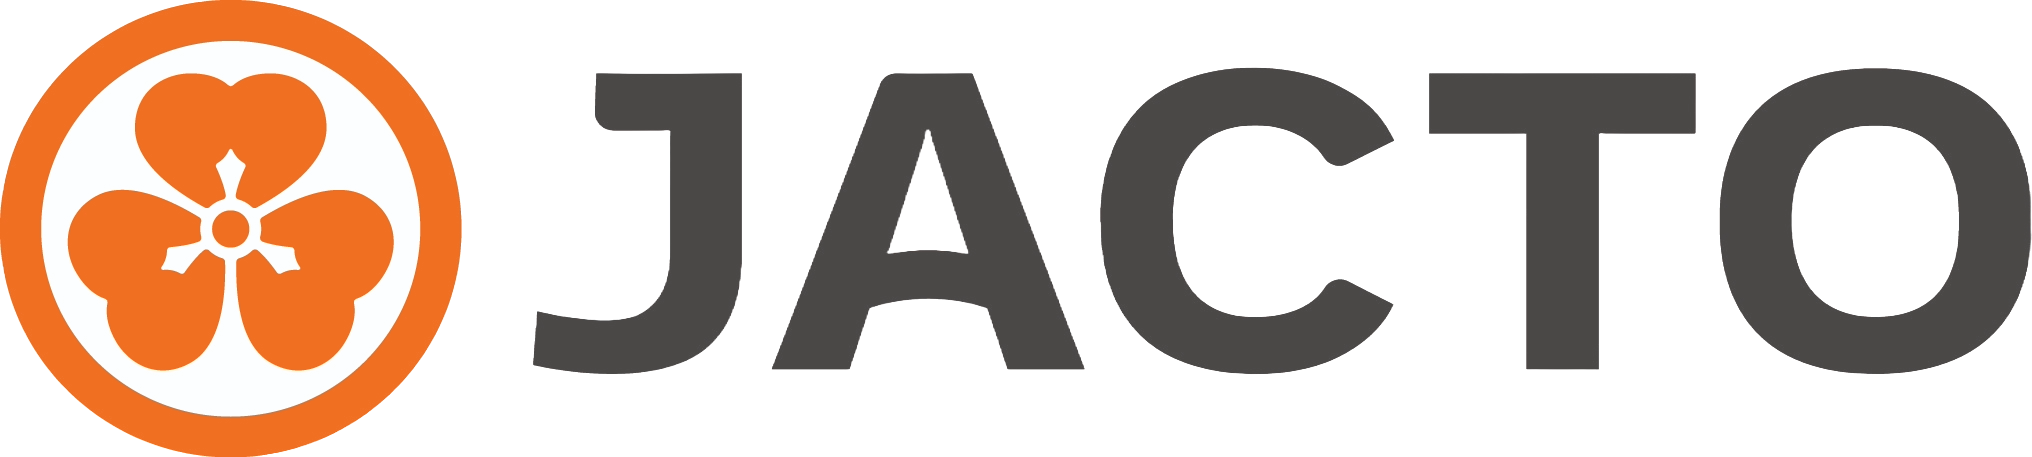 jacto logo